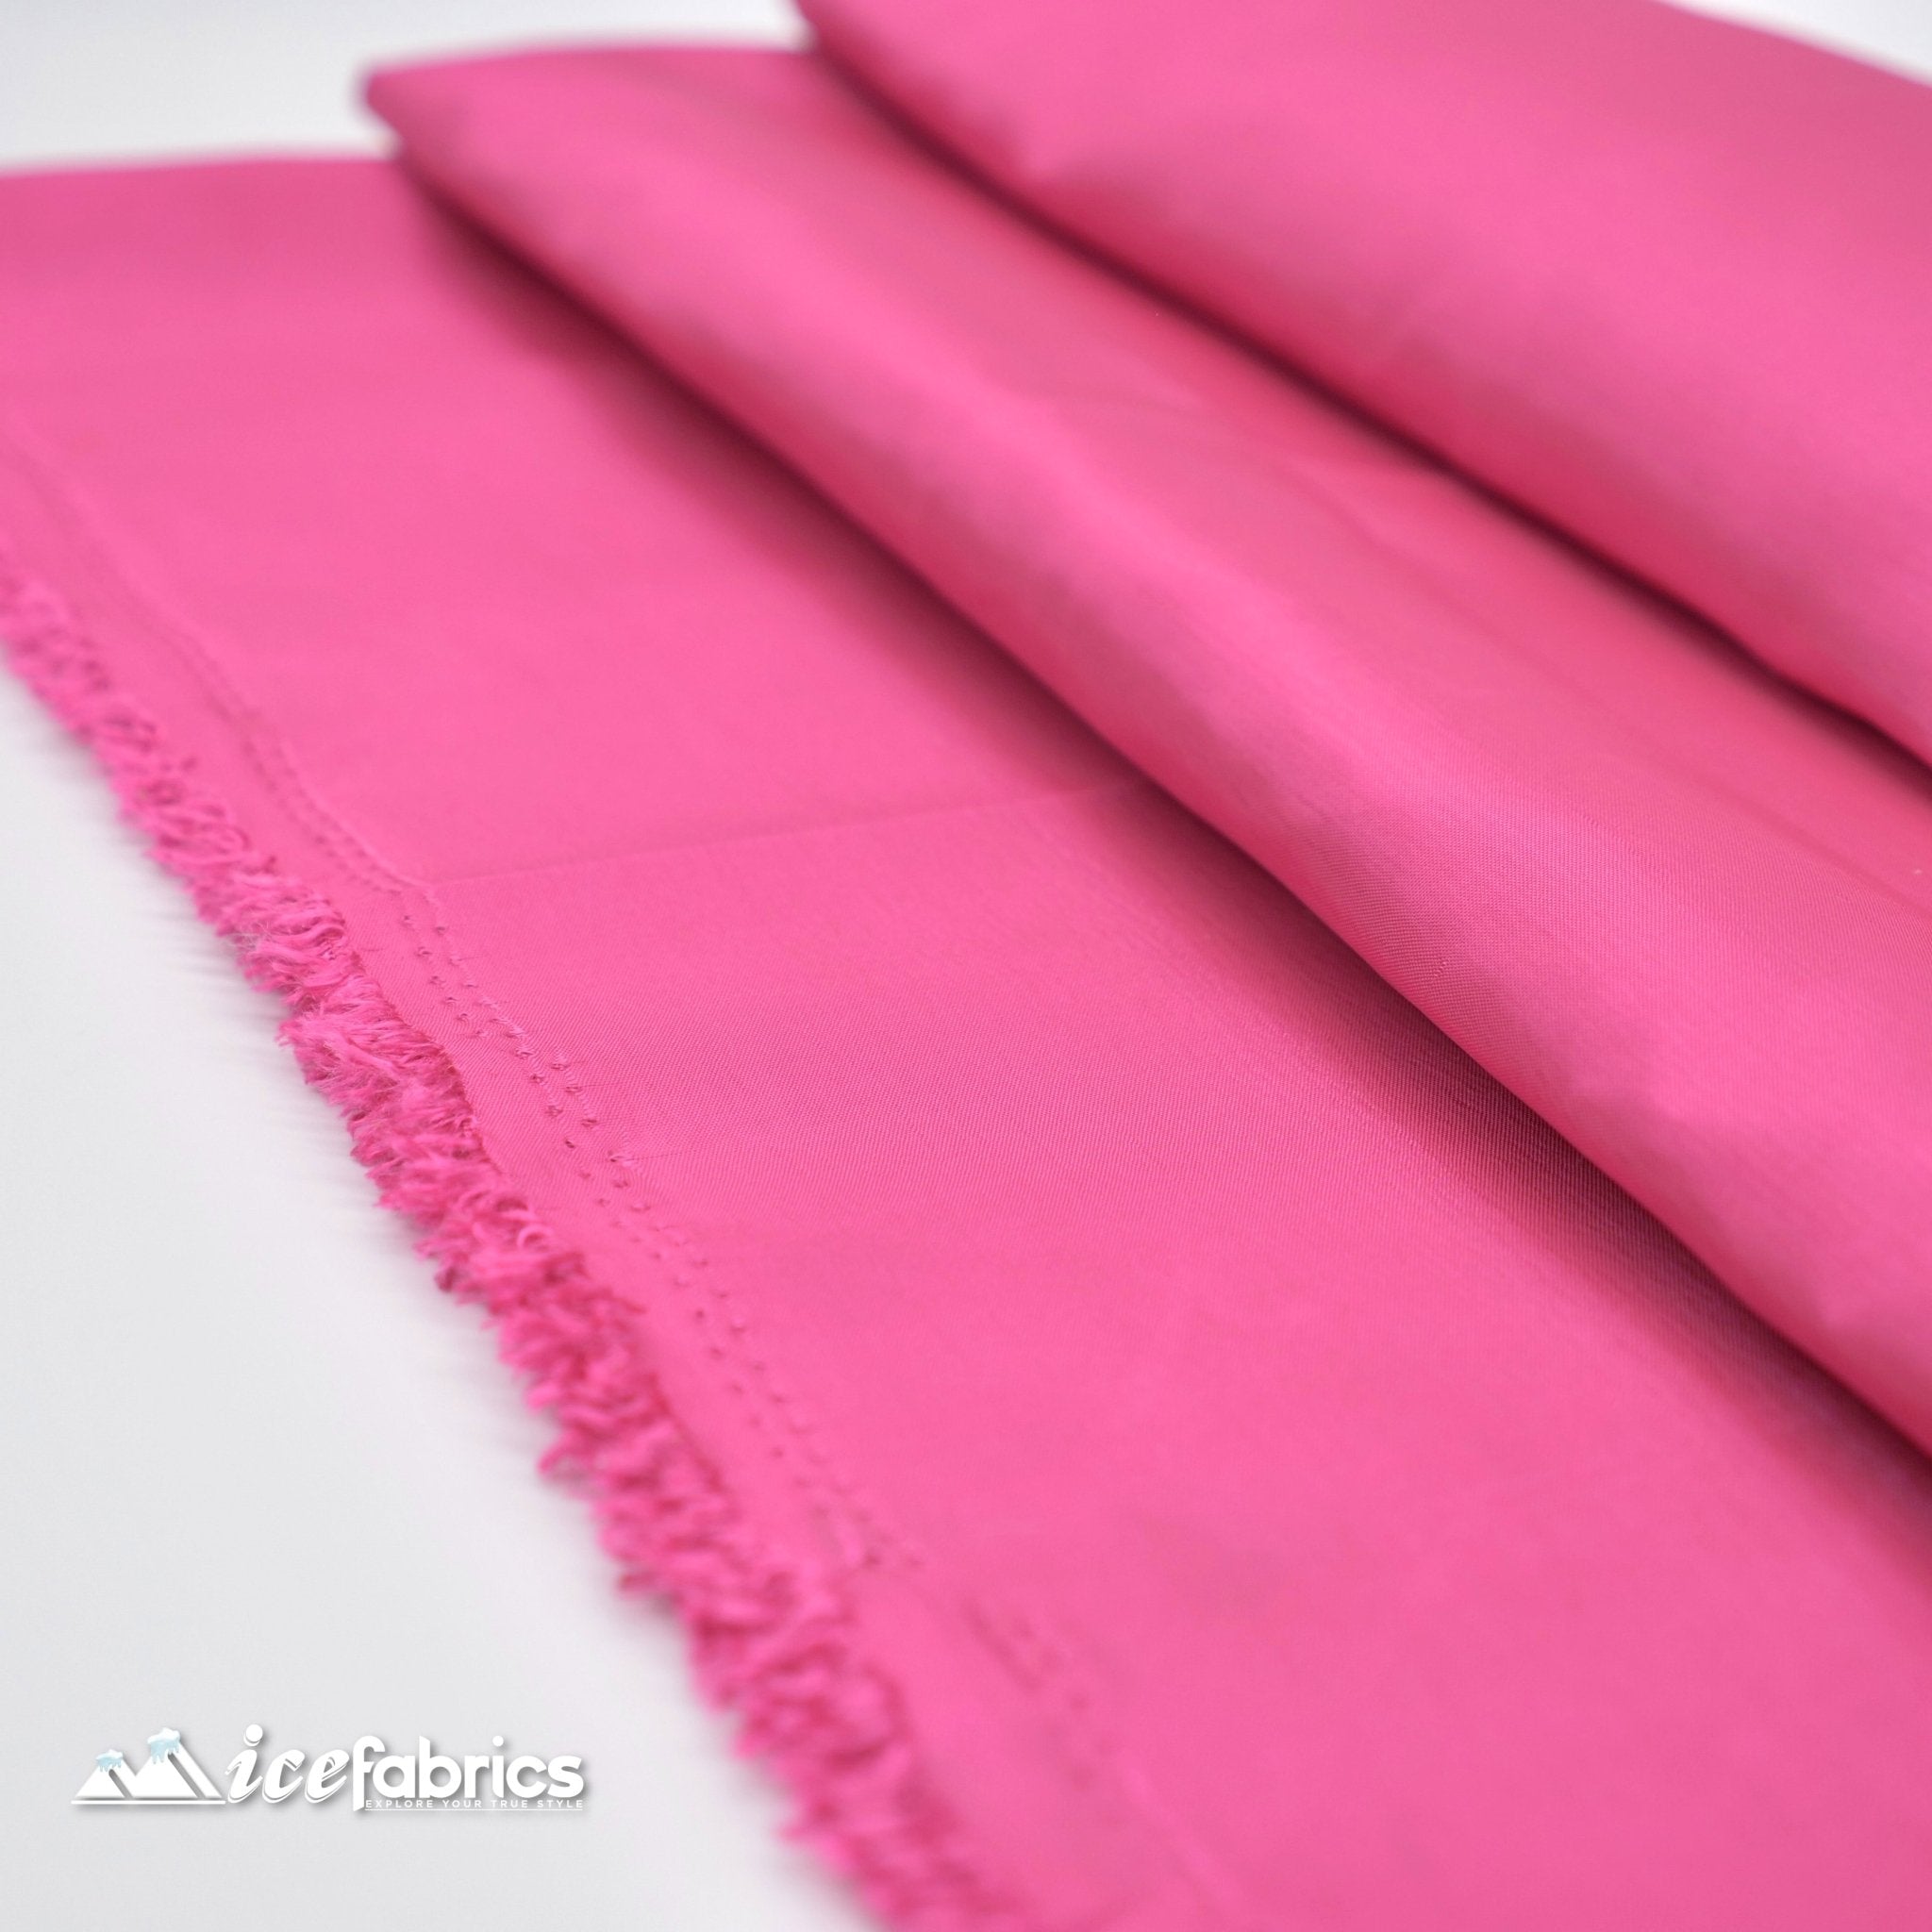 Hot Pink Luxury Solid/ Taffeta Fabric / Fashion FabricTaffeta FabricICEFABRICICE FABRICSHot PinkPer YardHot Pink Luxury Solid/ Taffeta Fabric / Fashion Fabric ICEFABRIC